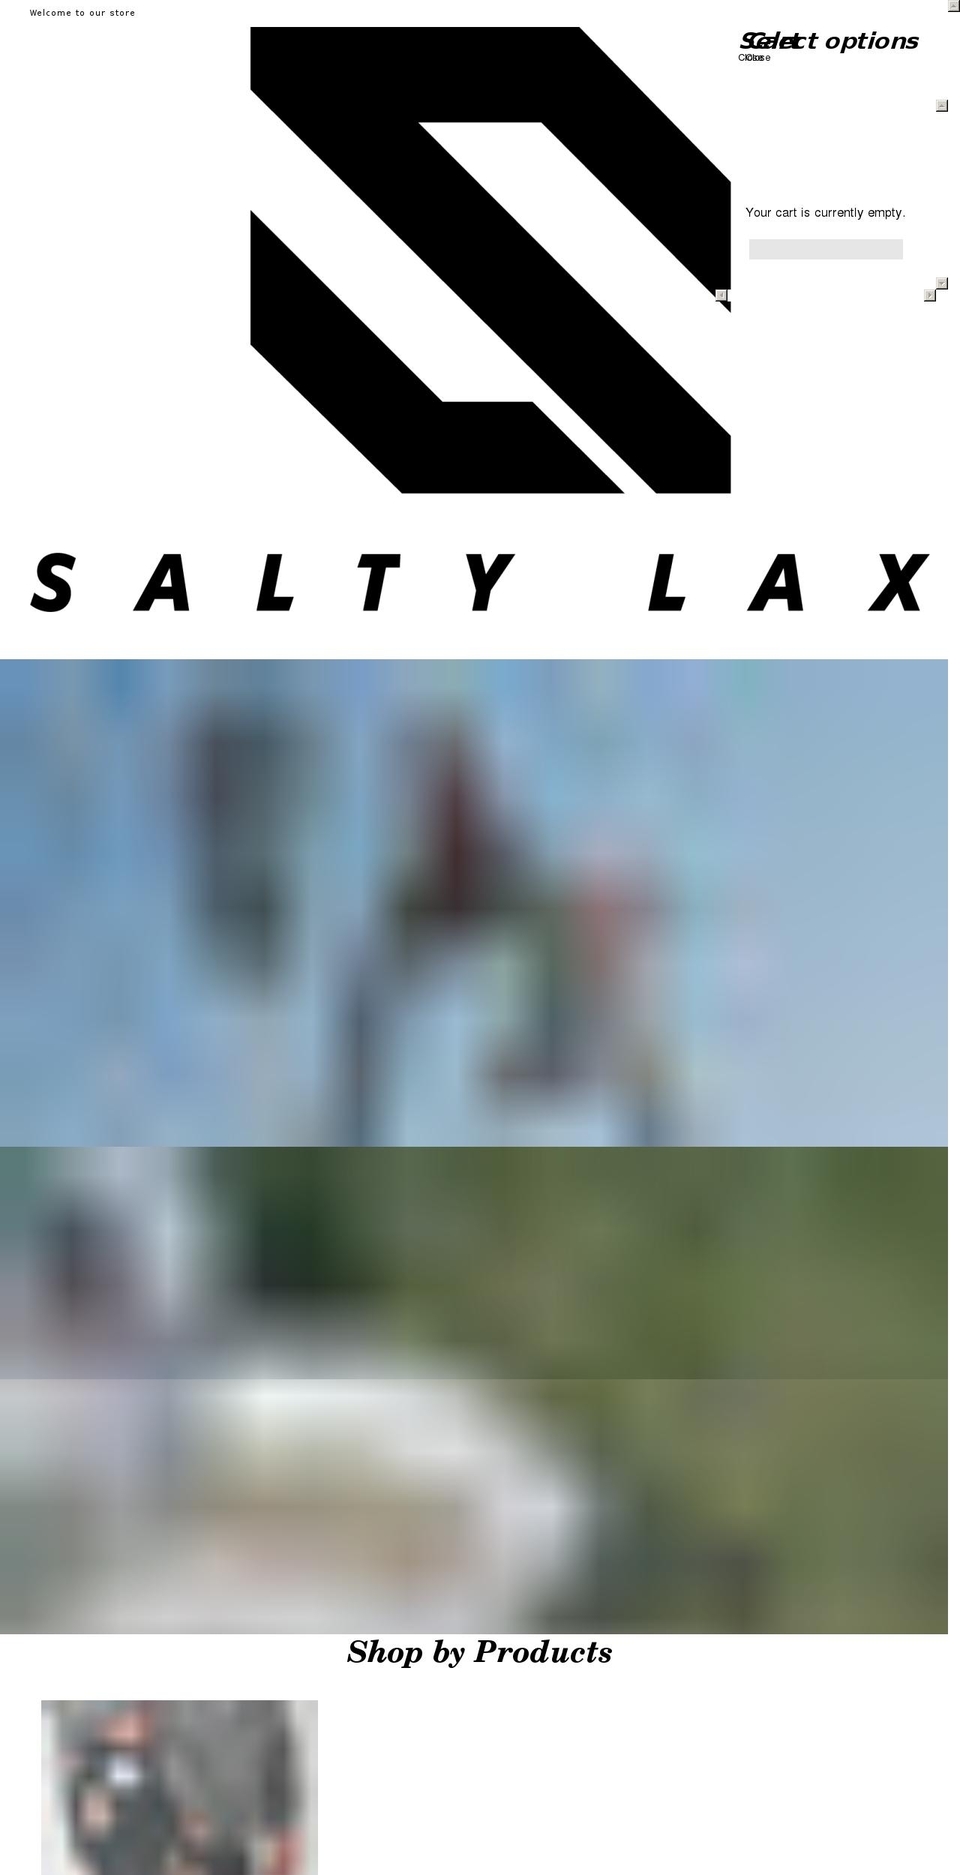 saltylacrosse.com shopify website screenshot